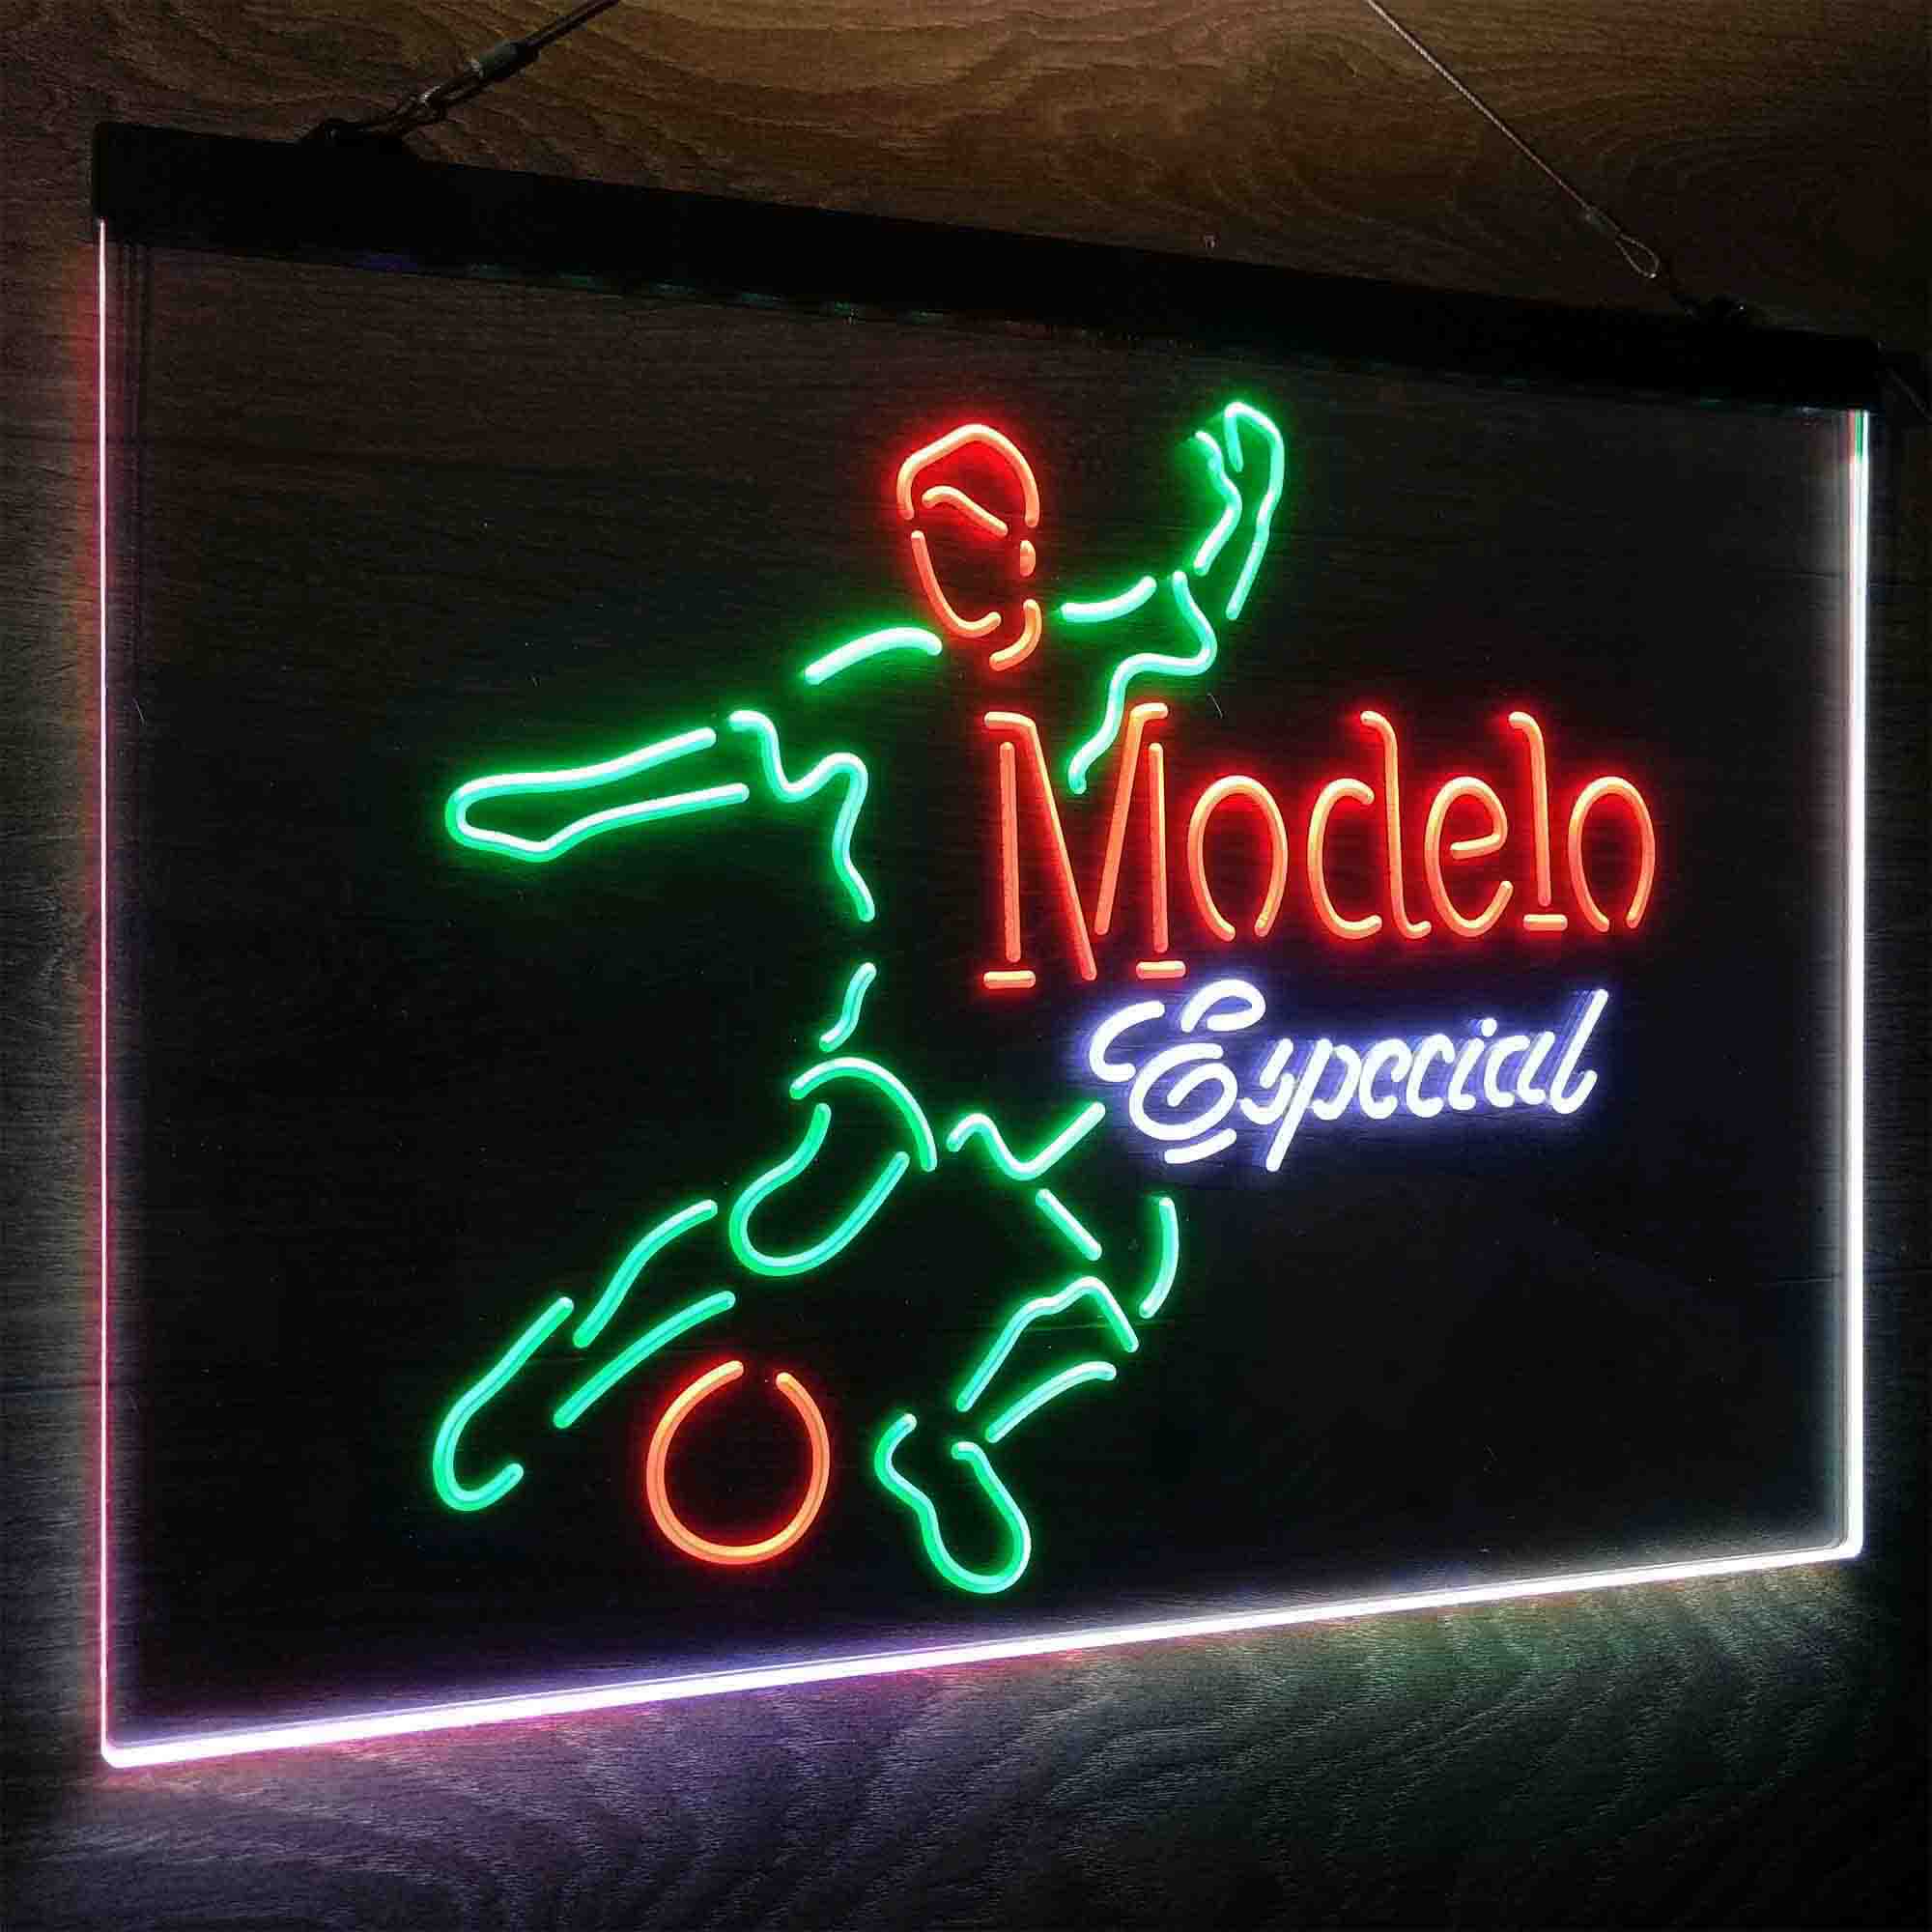 Modelo Especial Bar Neon LED Sign 3 Colors